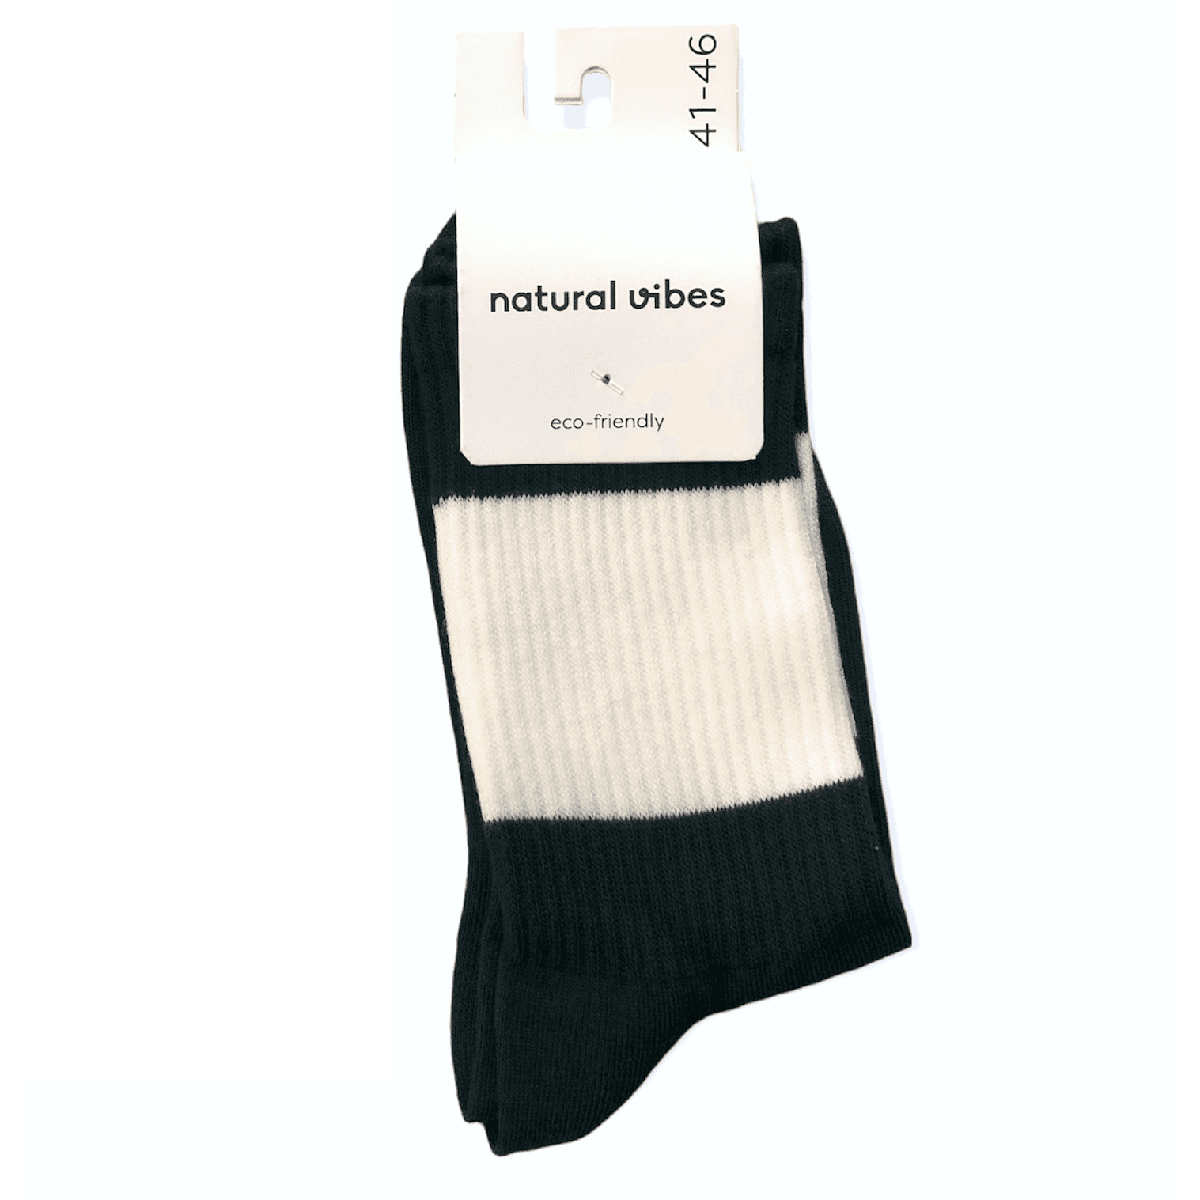 Blockstreifen-Socken